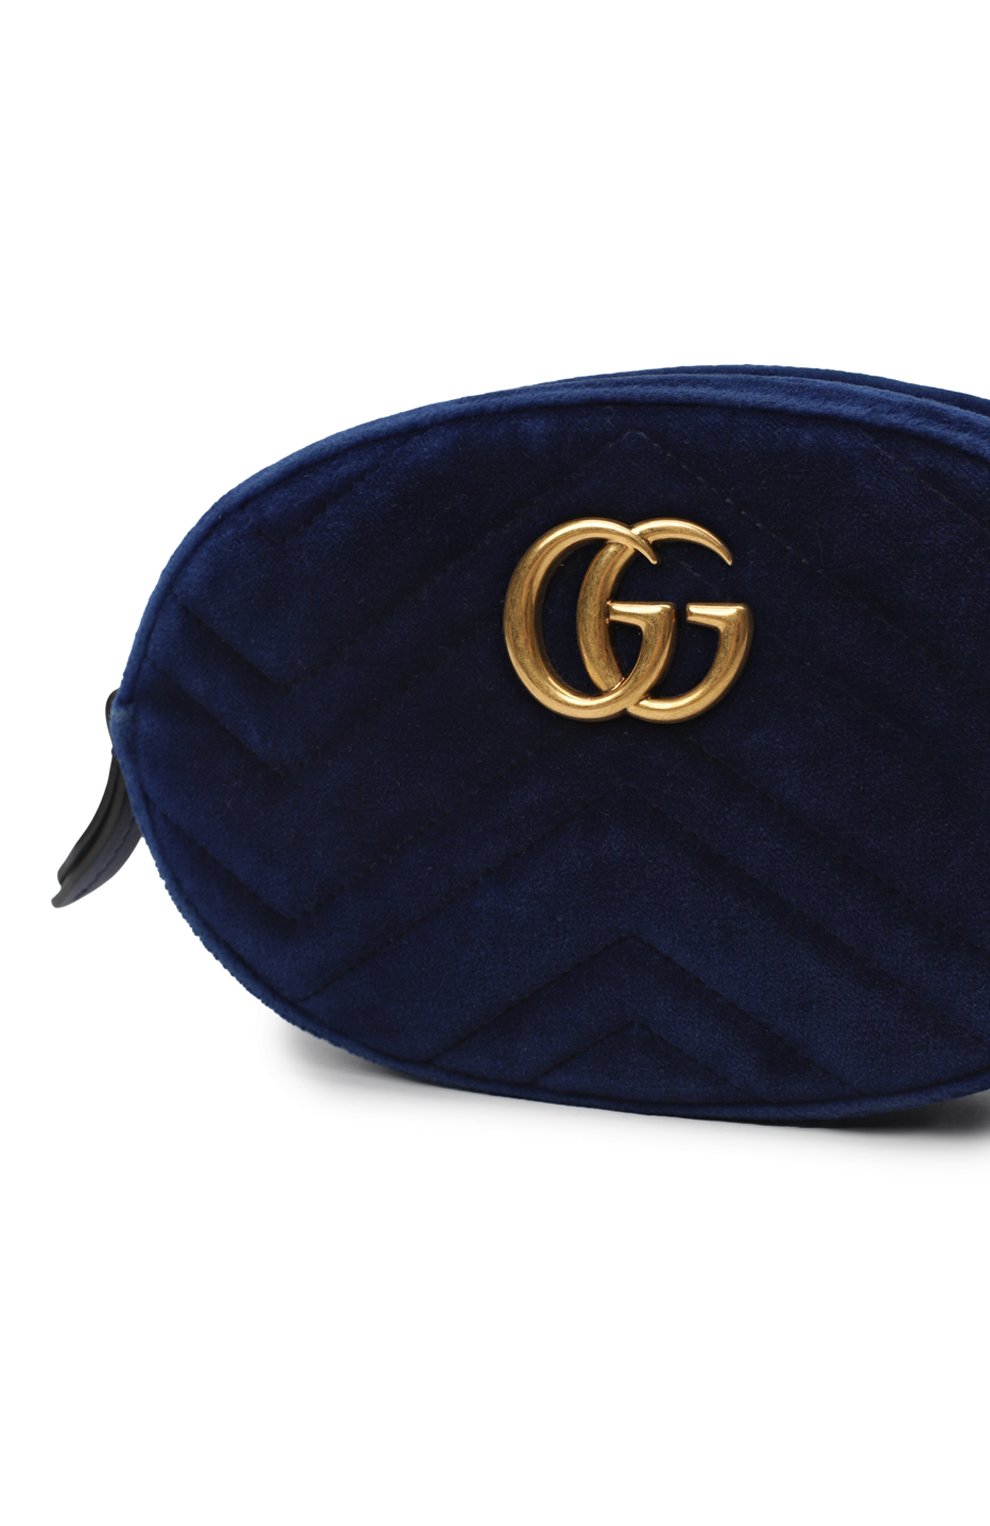 Поясная сумка GG Marmont | Gucci | Синий - 6